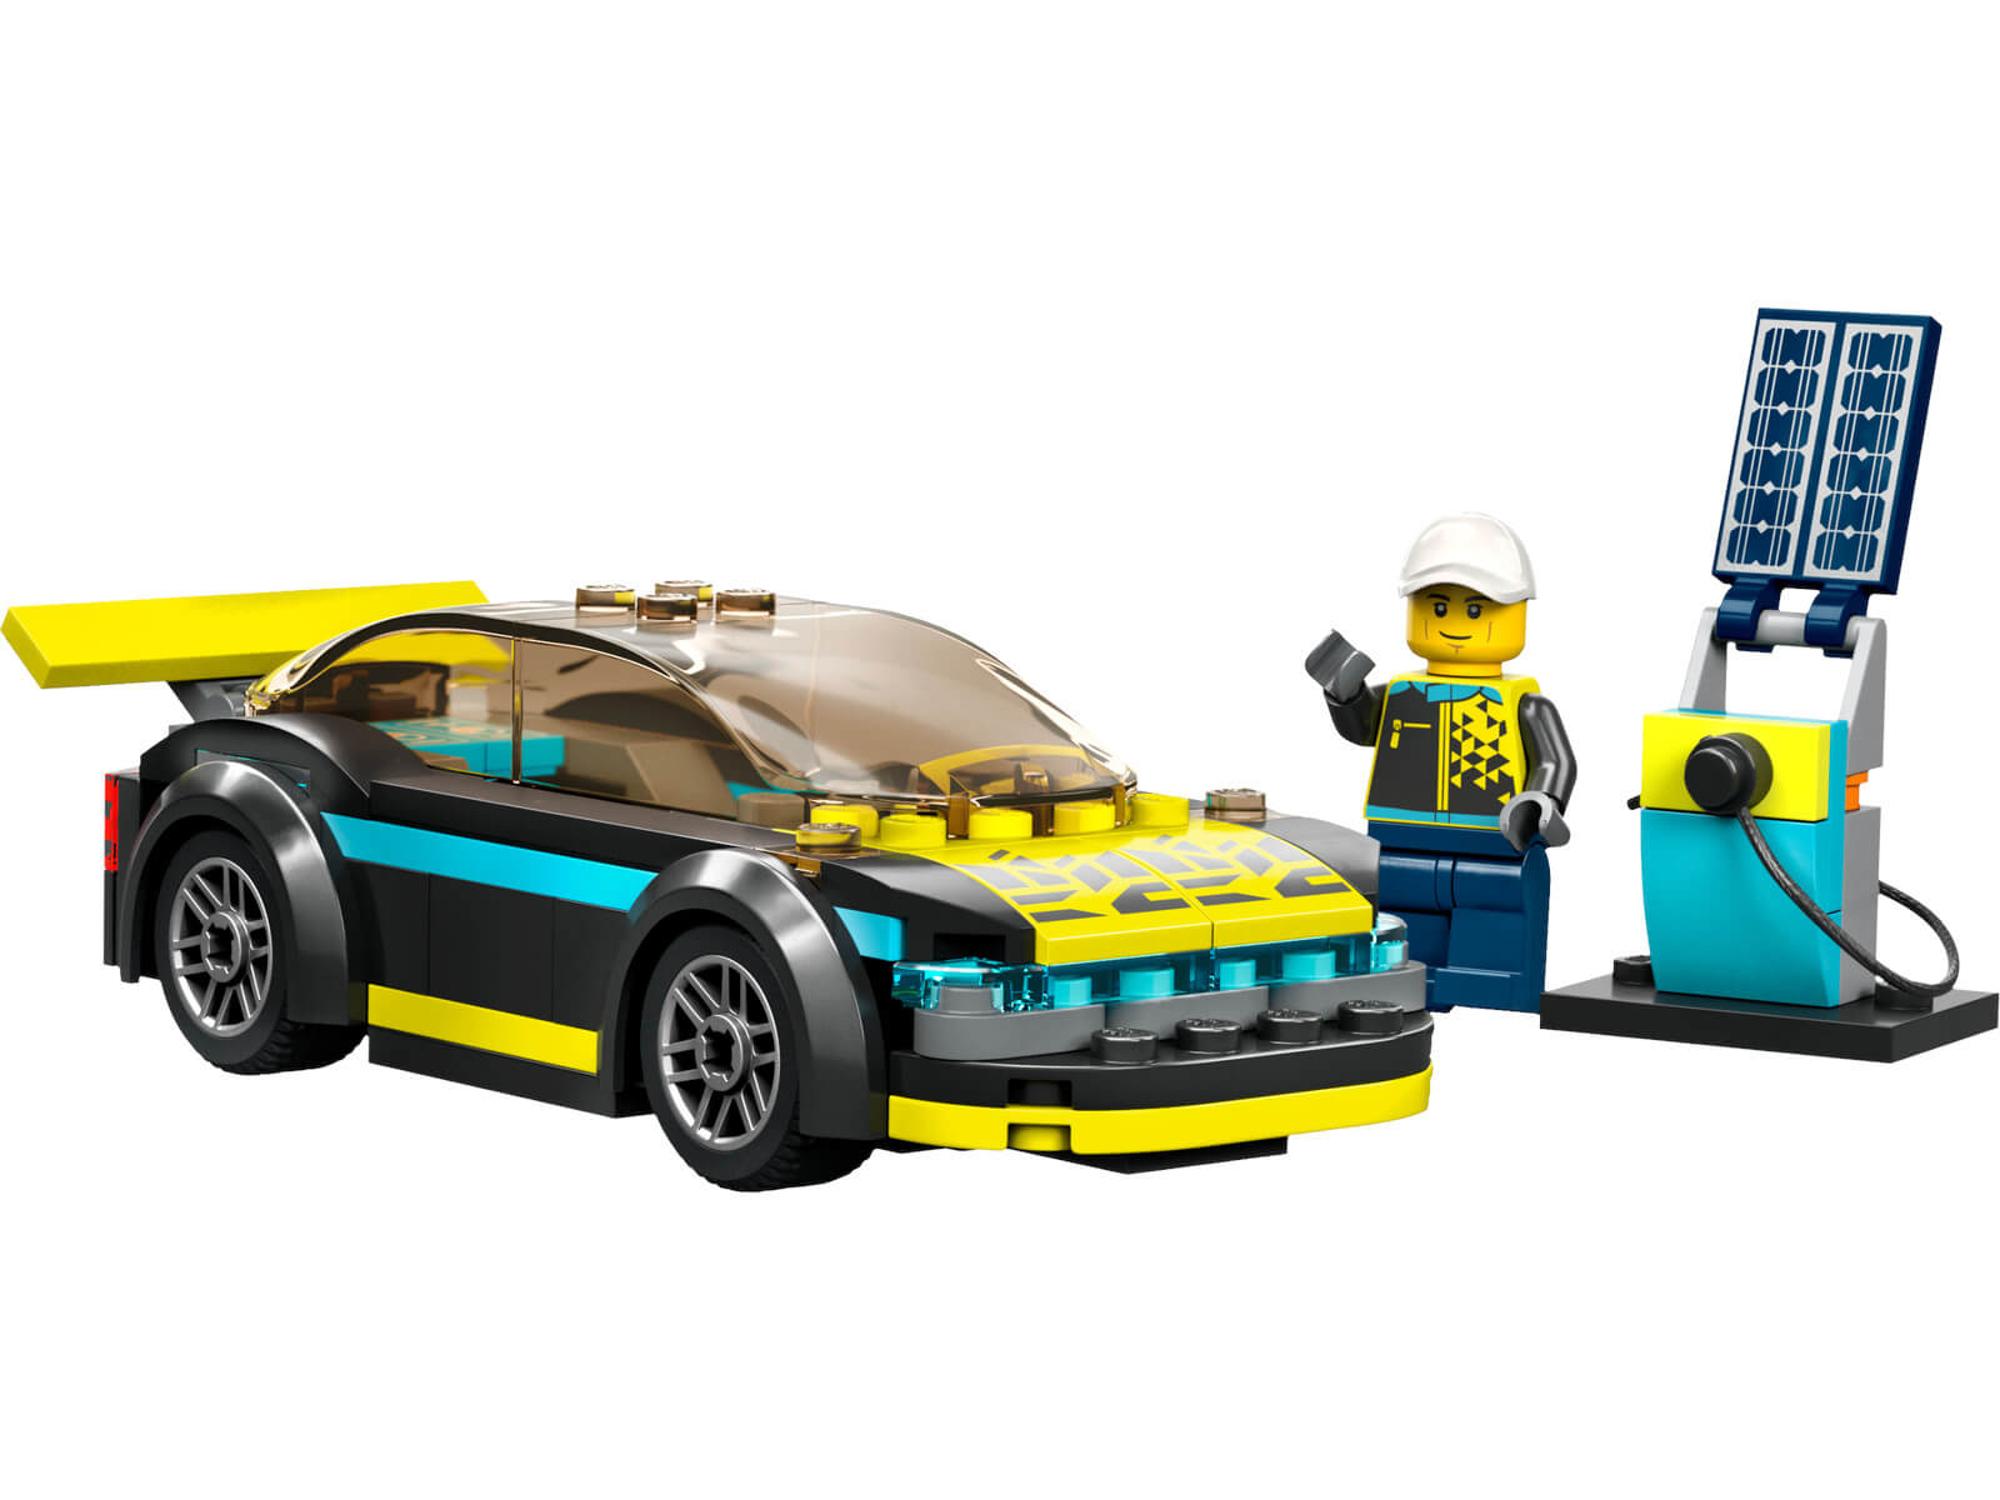 LEGO City - Electric Sports Car